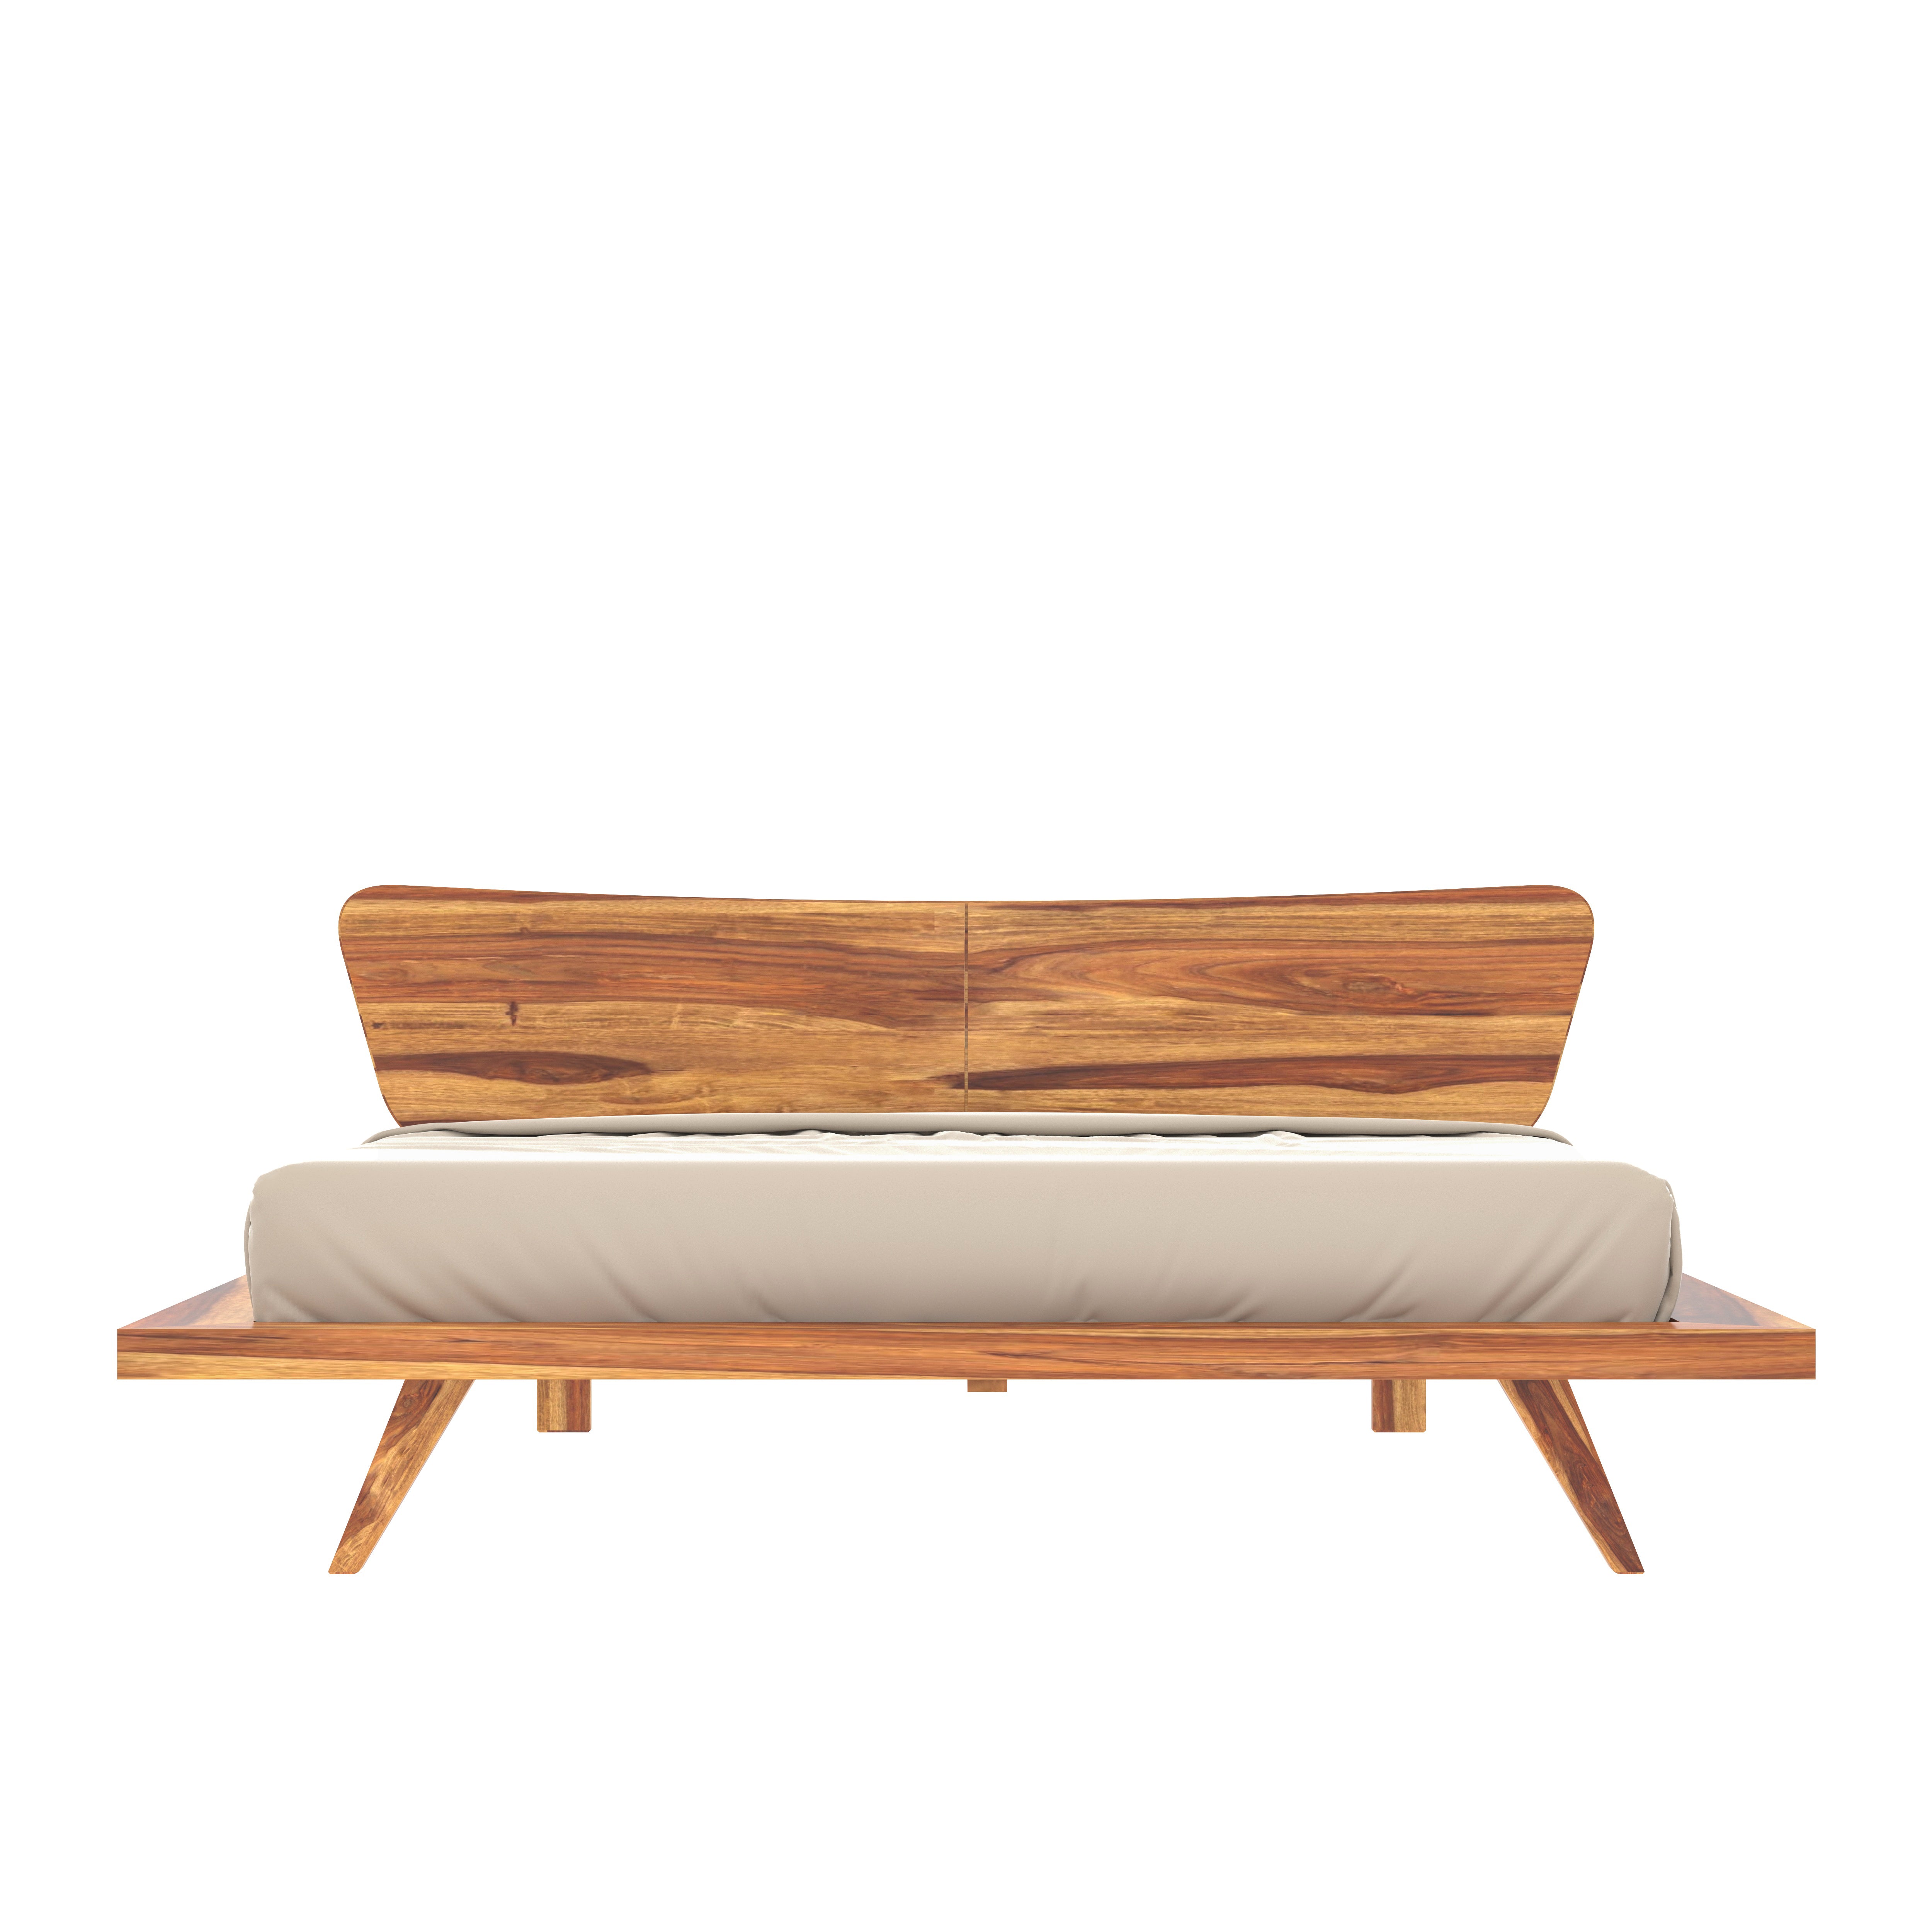 Traver Irish Sheesham Finished Wooden Handmade Bed Bed